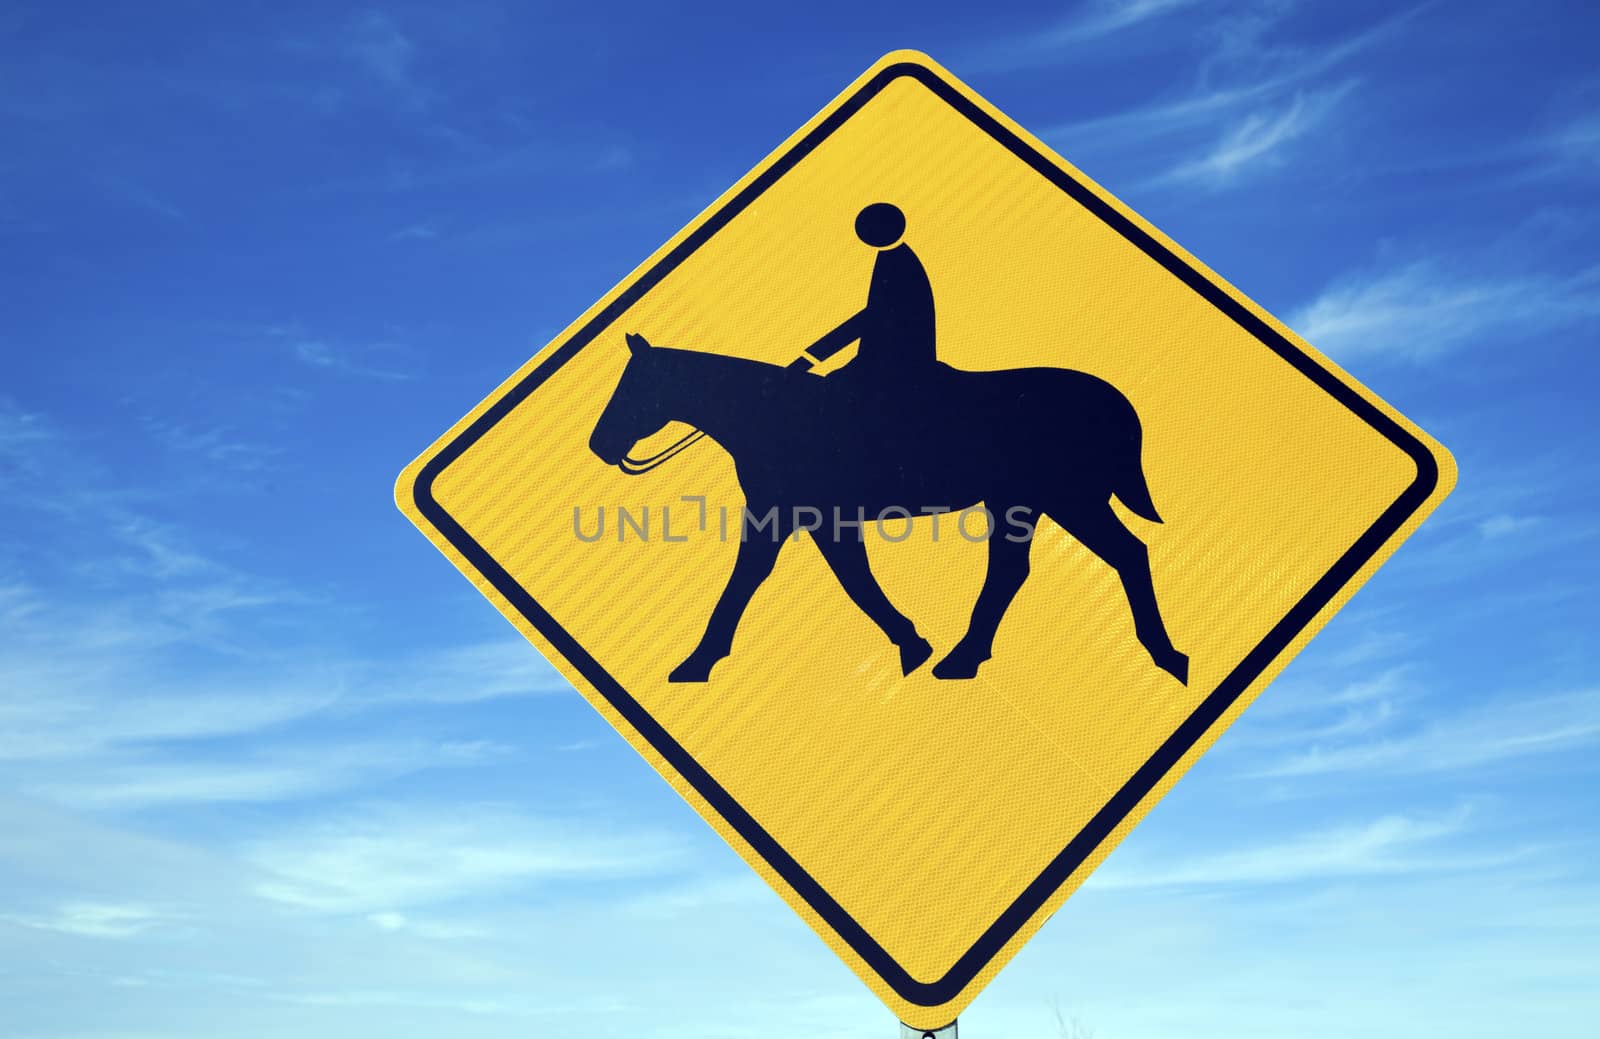 Horseback Riding sign against blue sky.